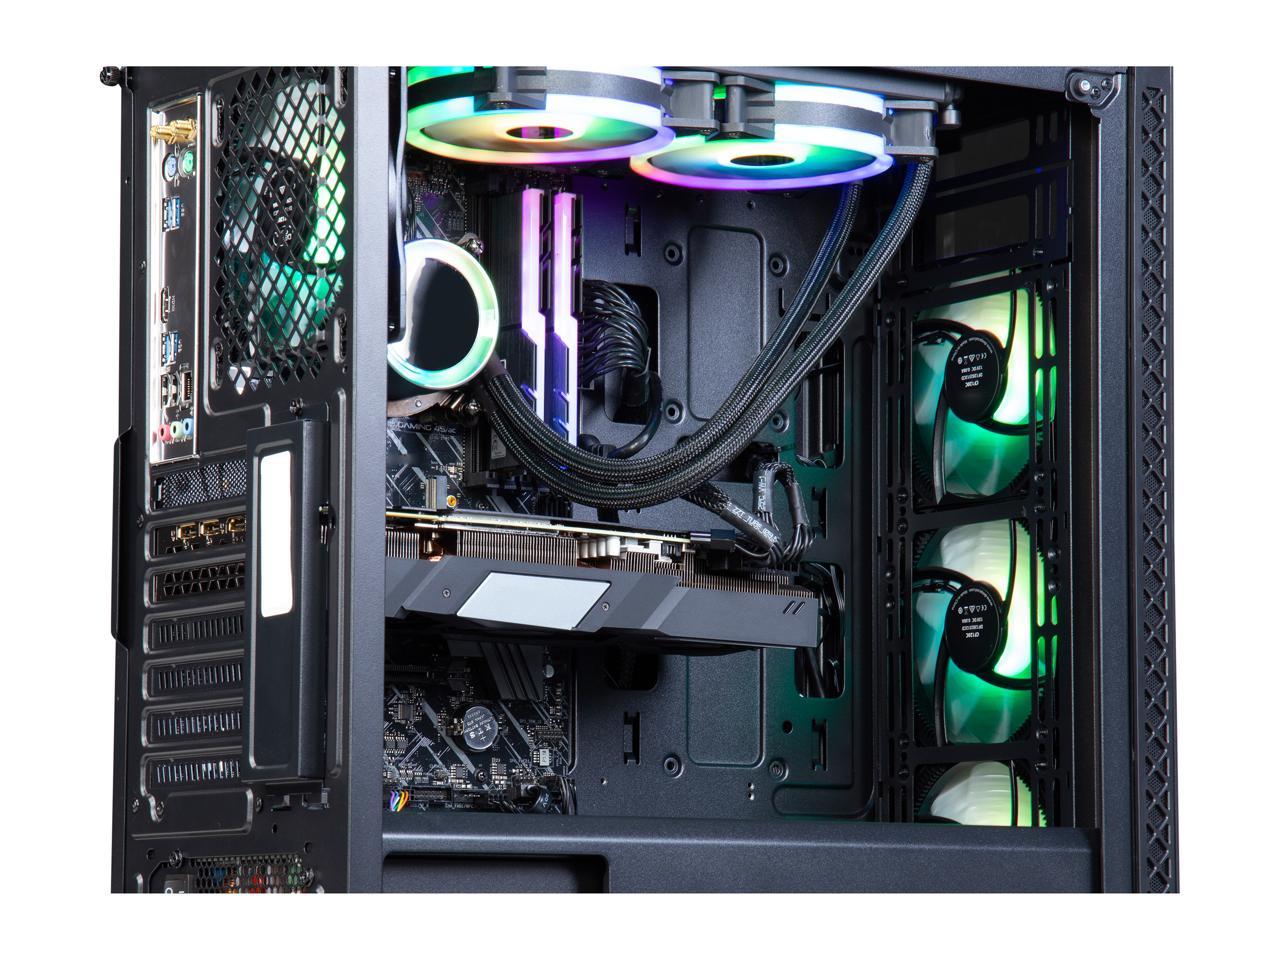 ABS Gladiator Gaming PC - Intel i9-9900K - GeForce RTX 2080 SUPER - G.SKILL TridentZ RGB 16GB DDR4 - 1TB SSD - Liquid Cooling 240mm